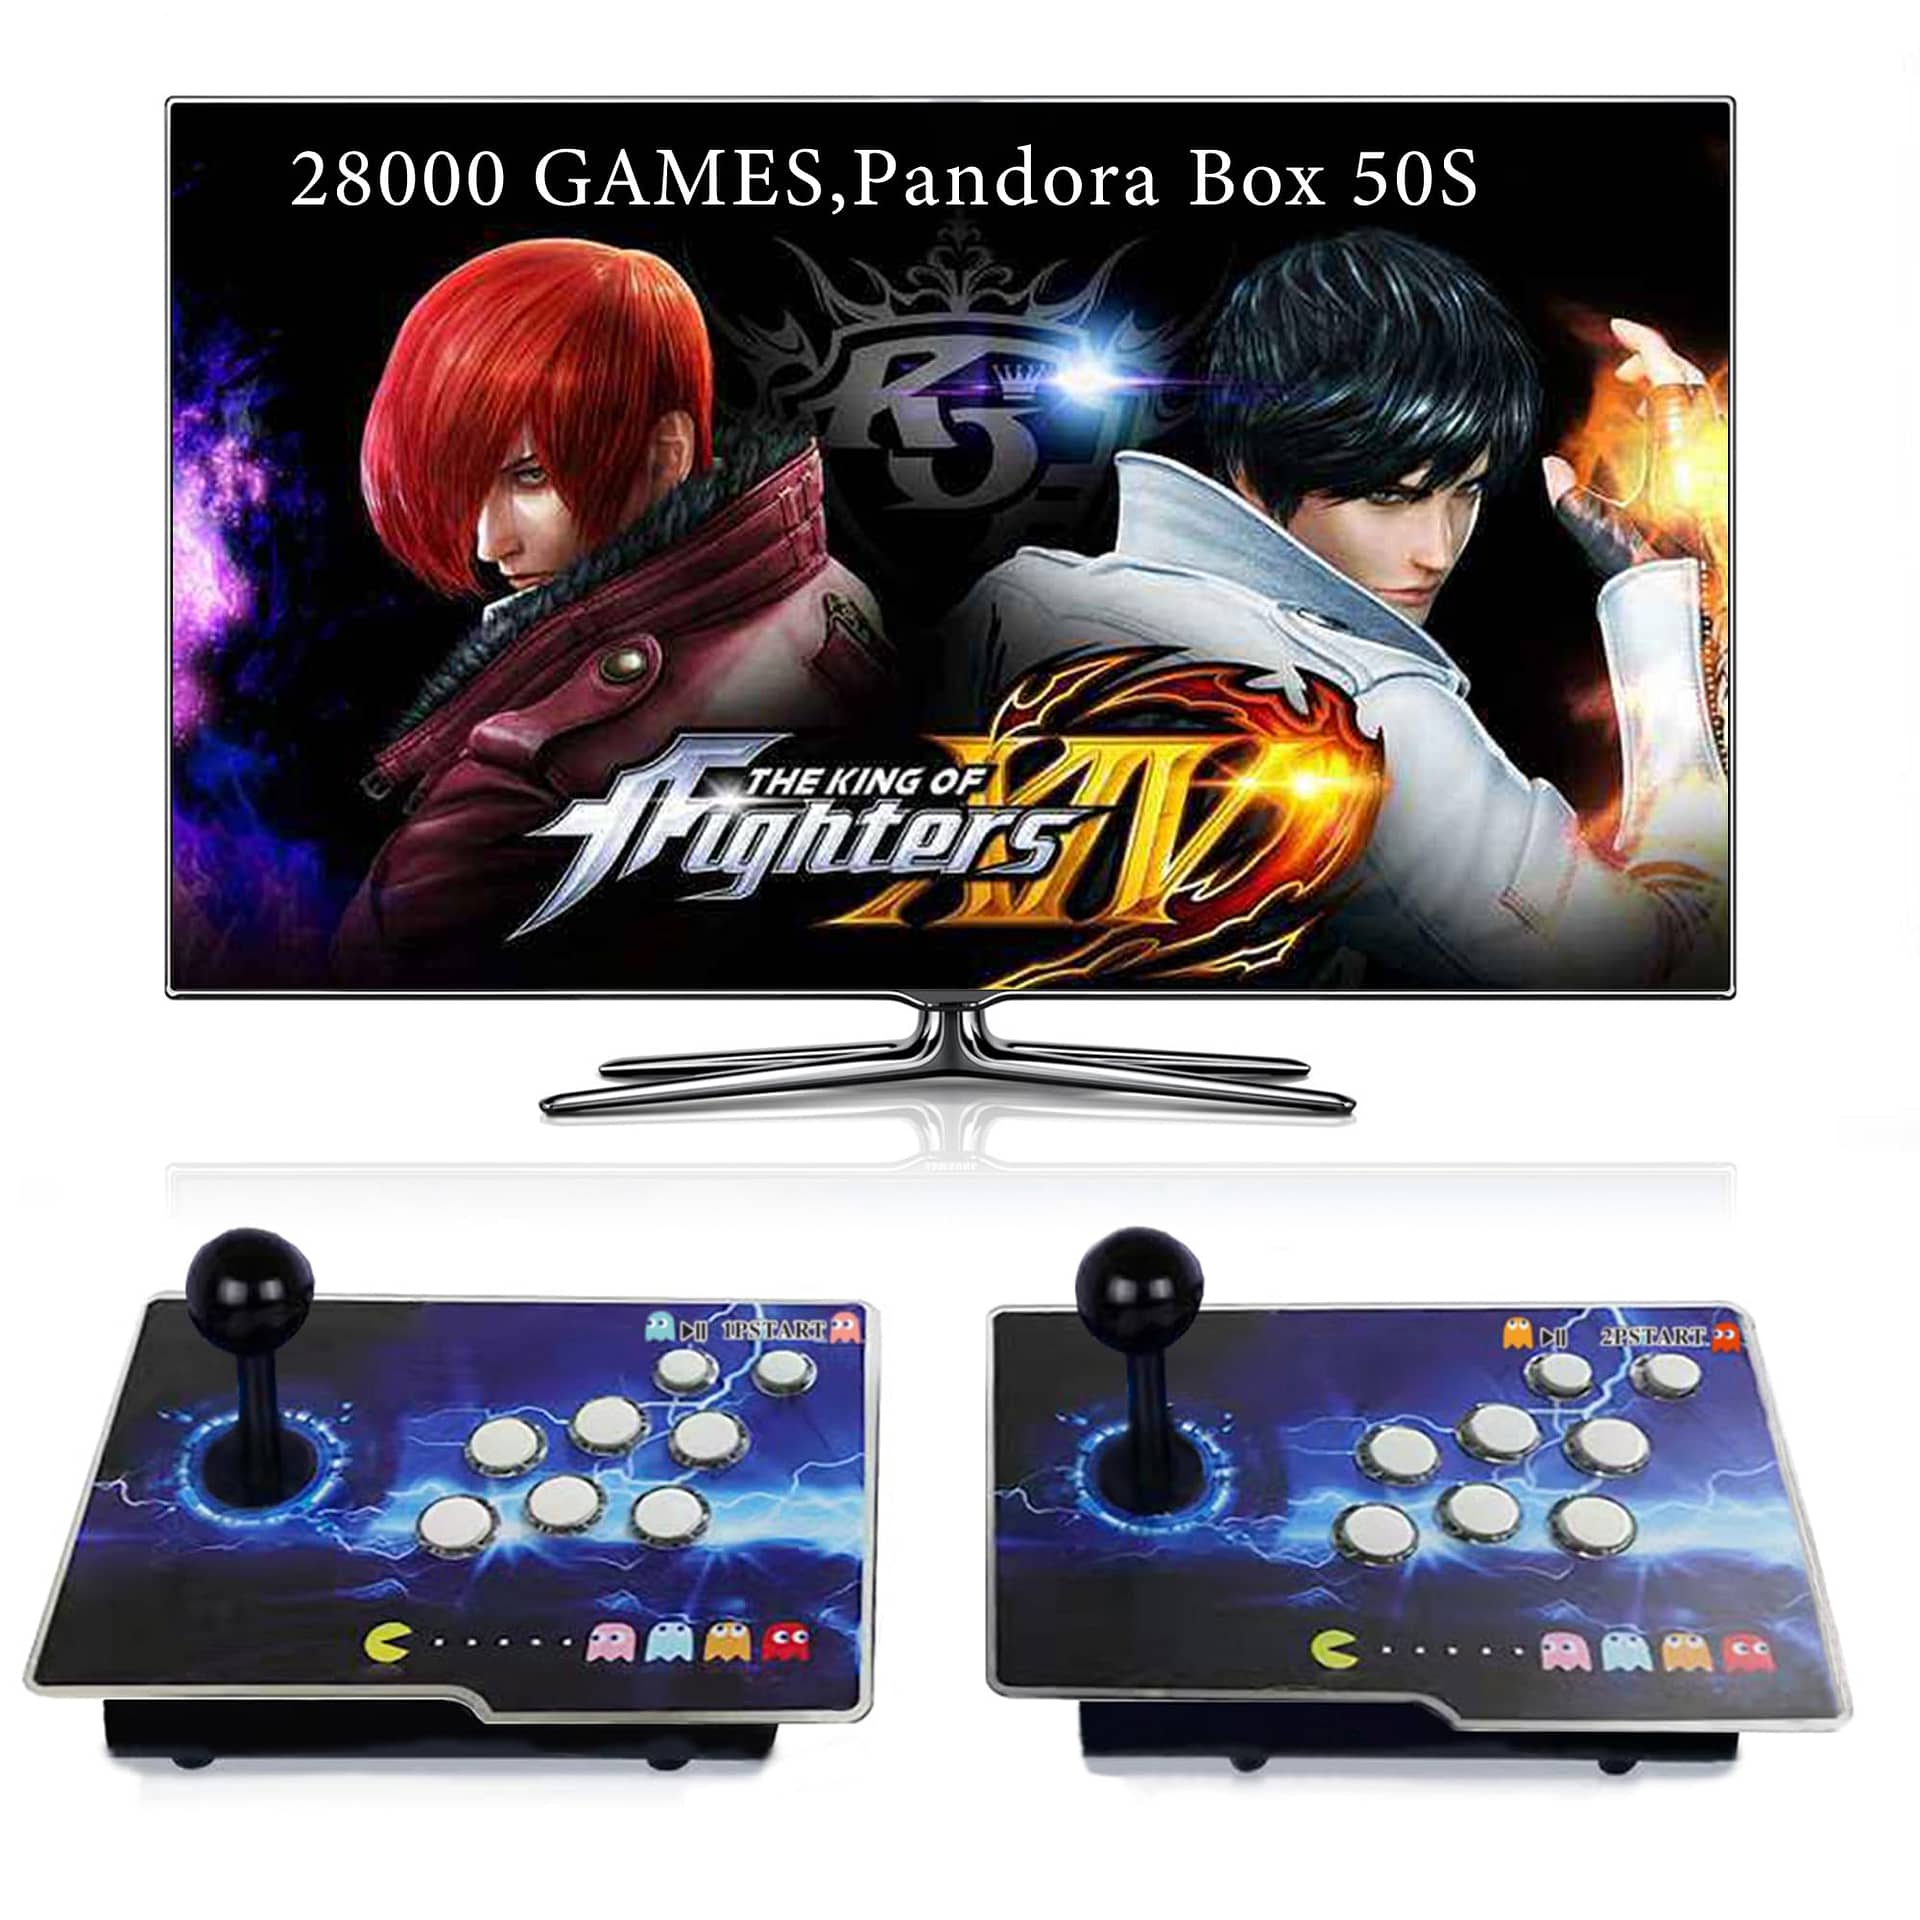 RegiisJoy【 28000 Games in 1 】 Pandora's Box 50S Arcade Game Console